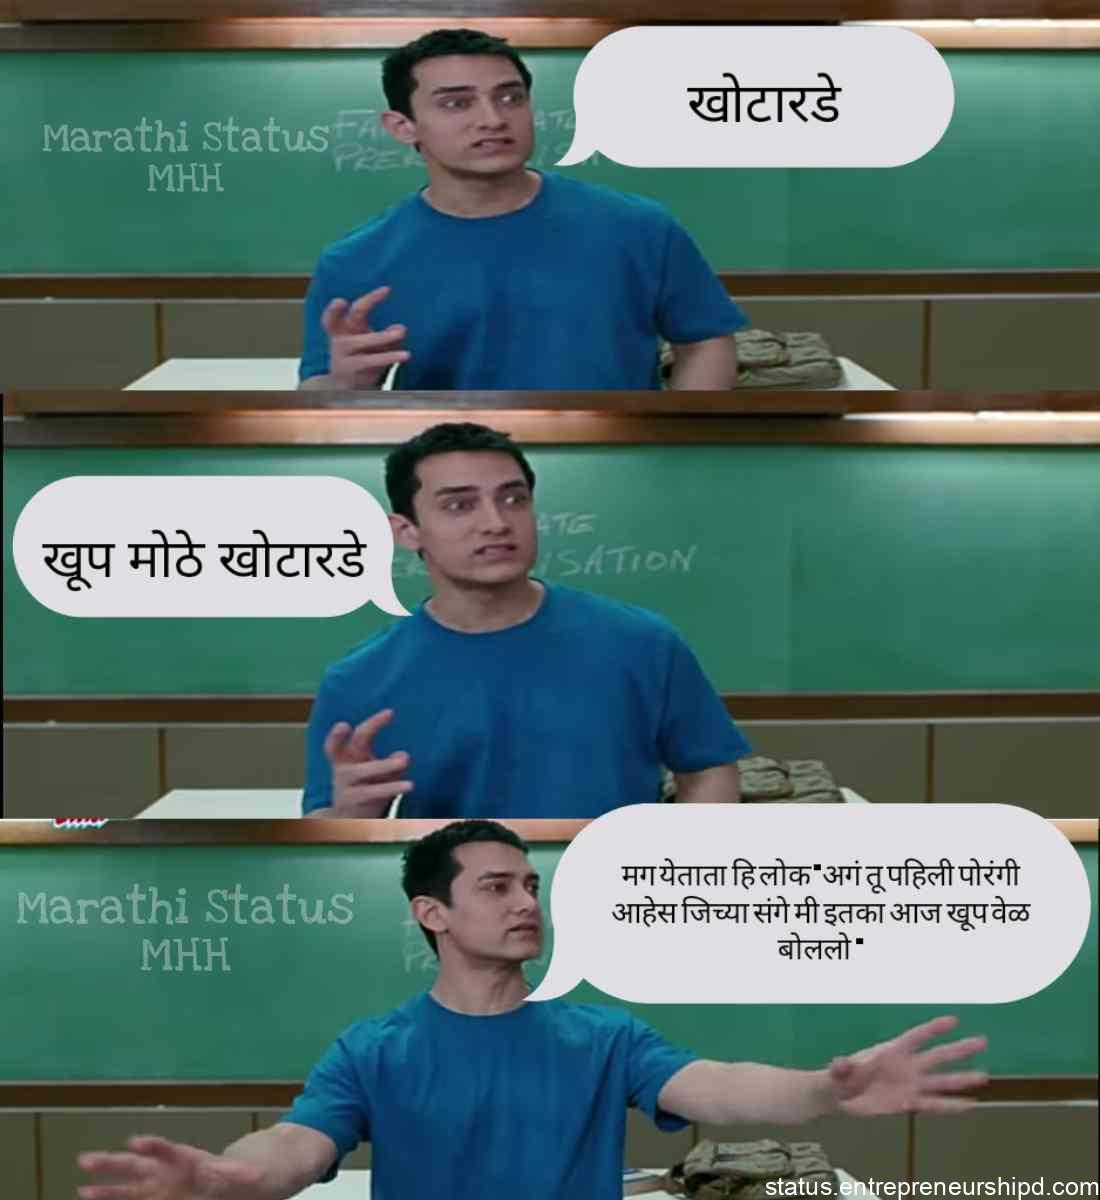 Amirkhan Marathi memes